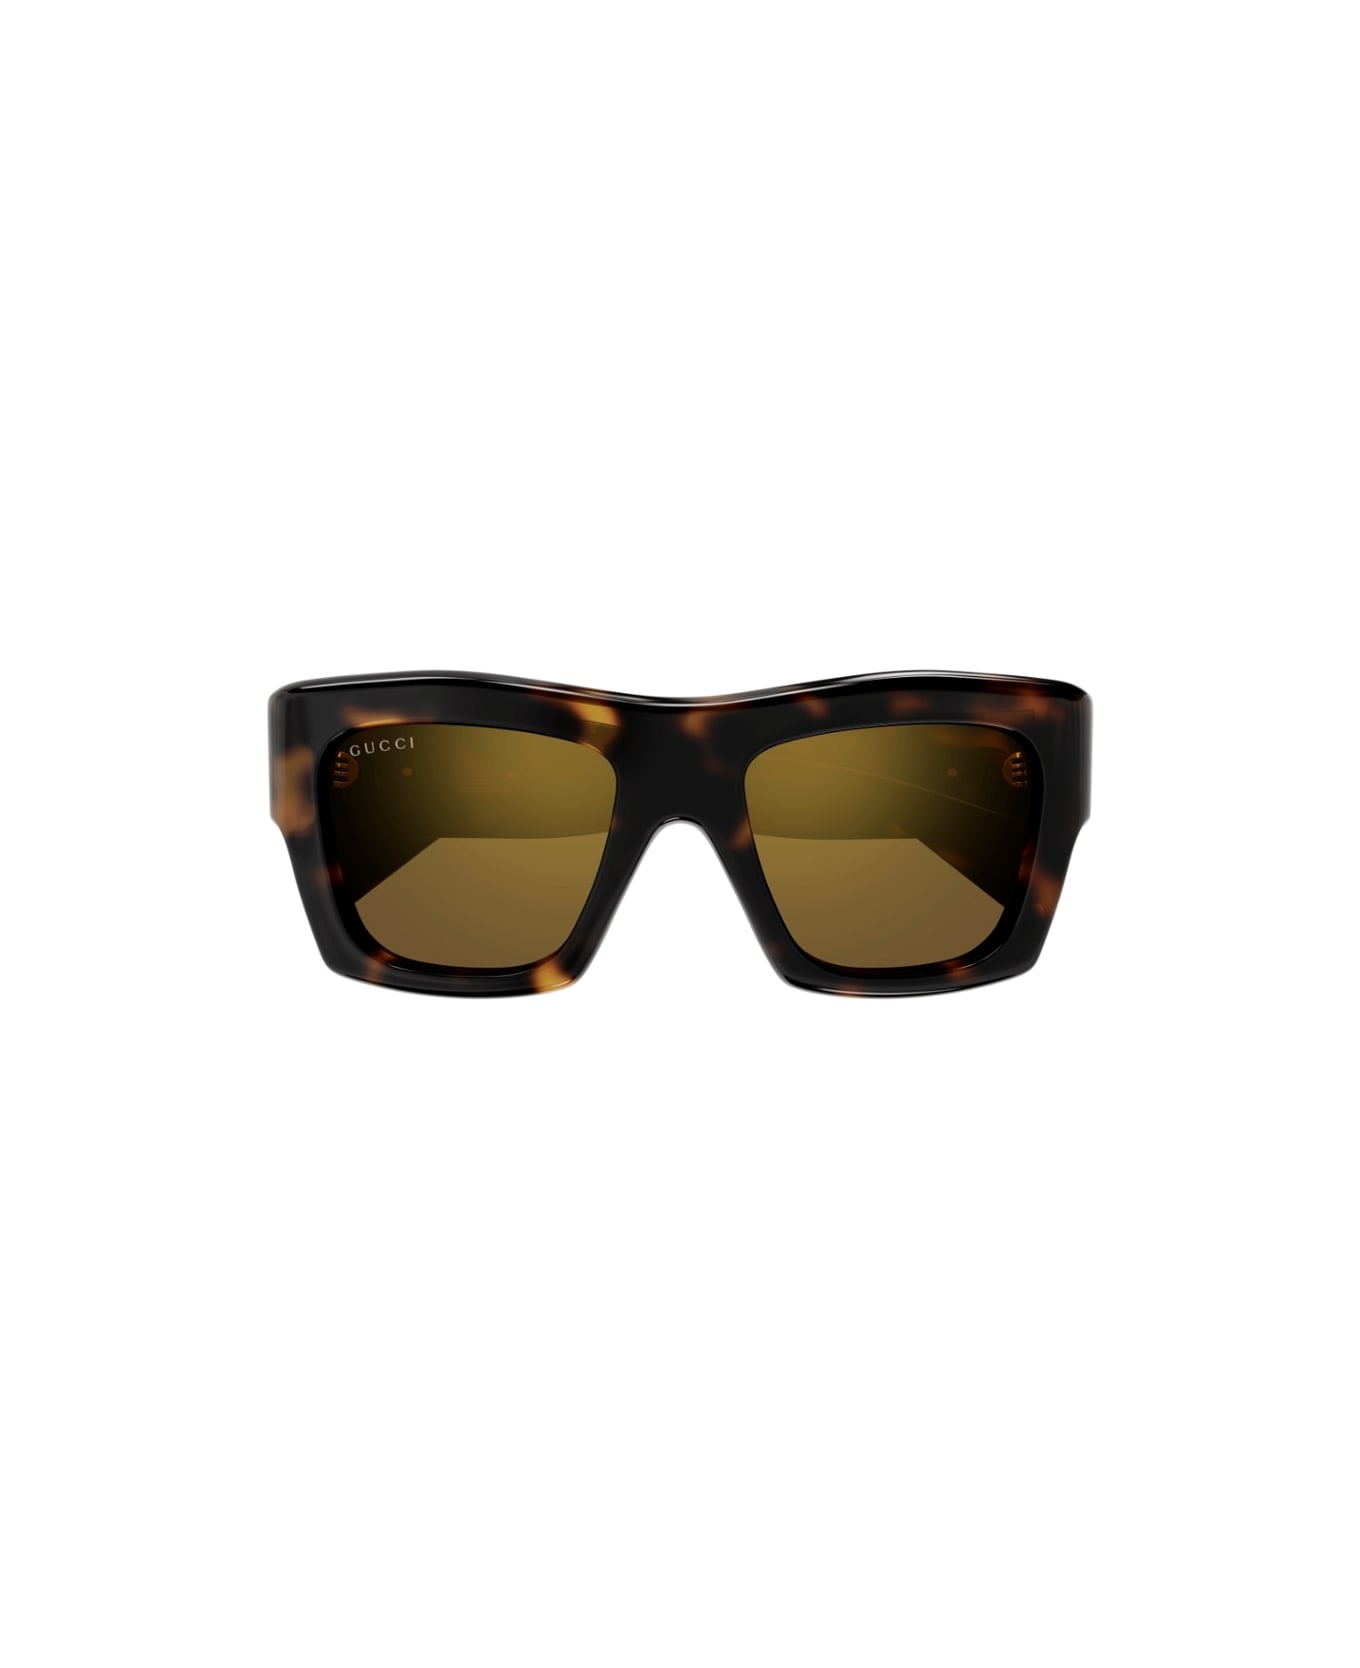 Gucci Eyewear GG1772s 007 Sunglasses